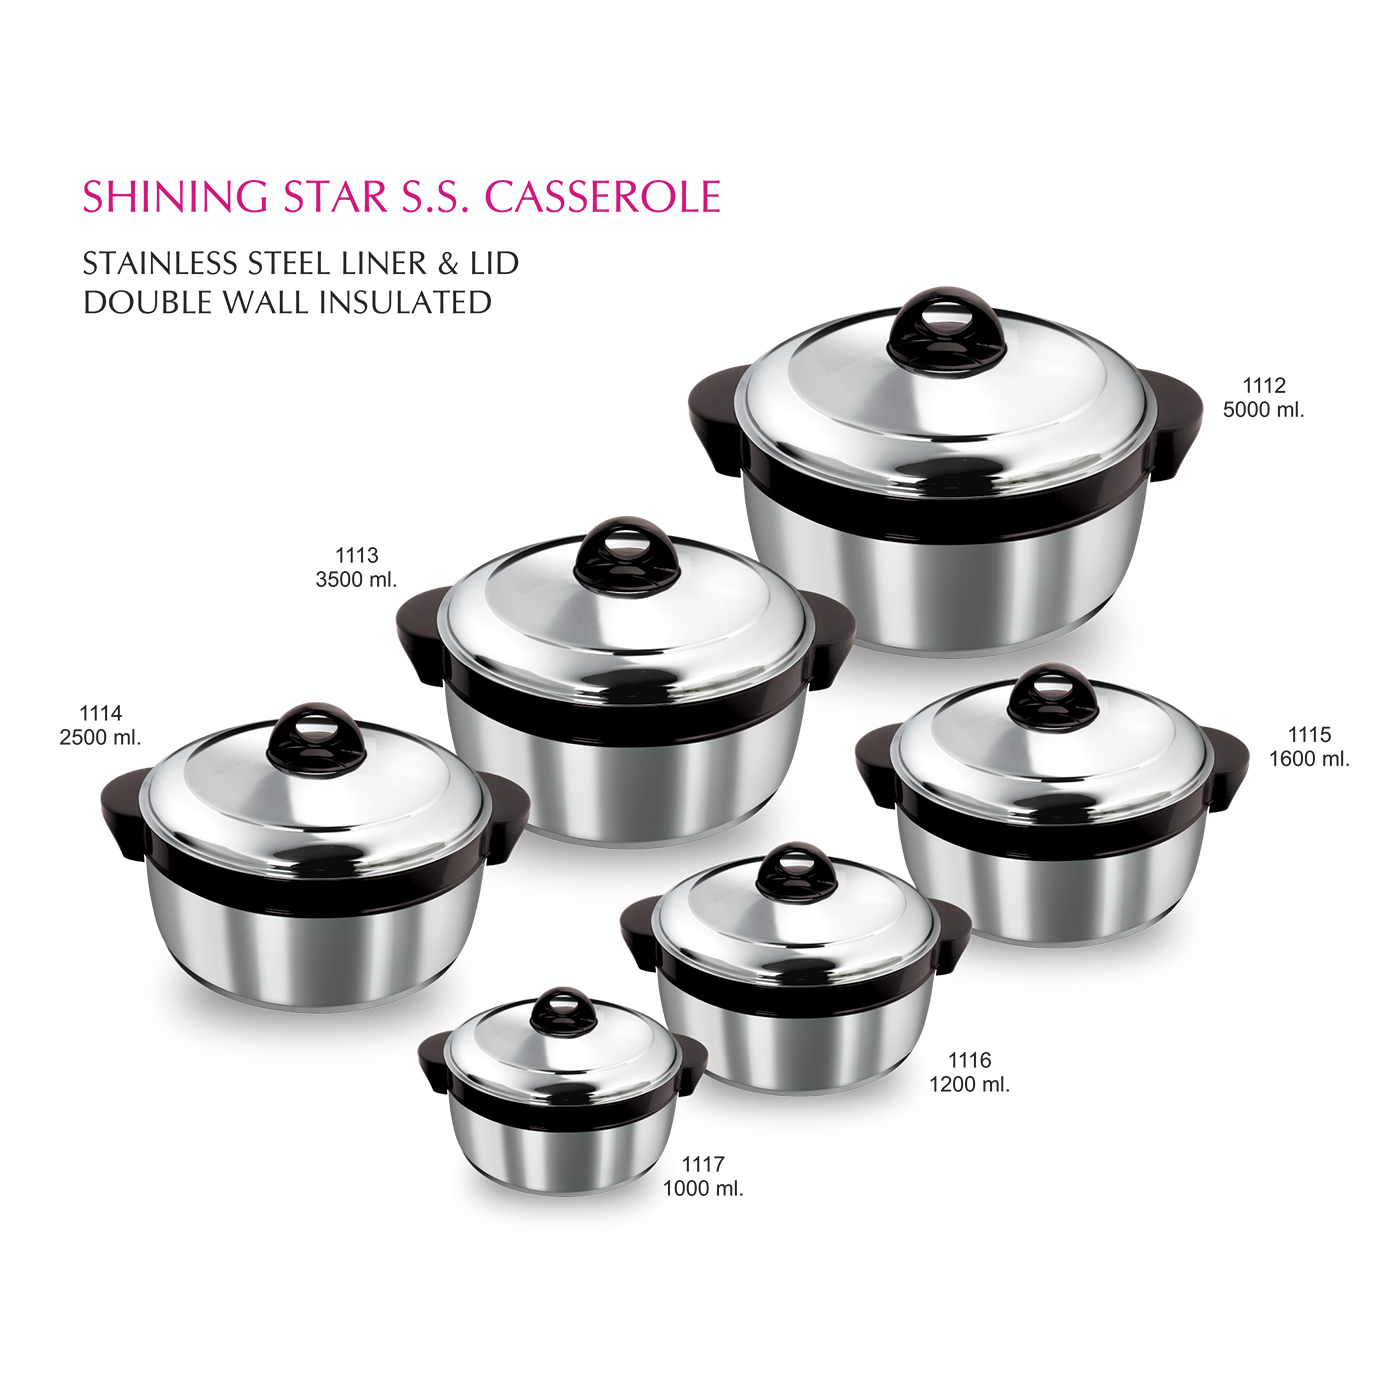 7500ml Shining Star Stainless Steel Hot Pot Casserole